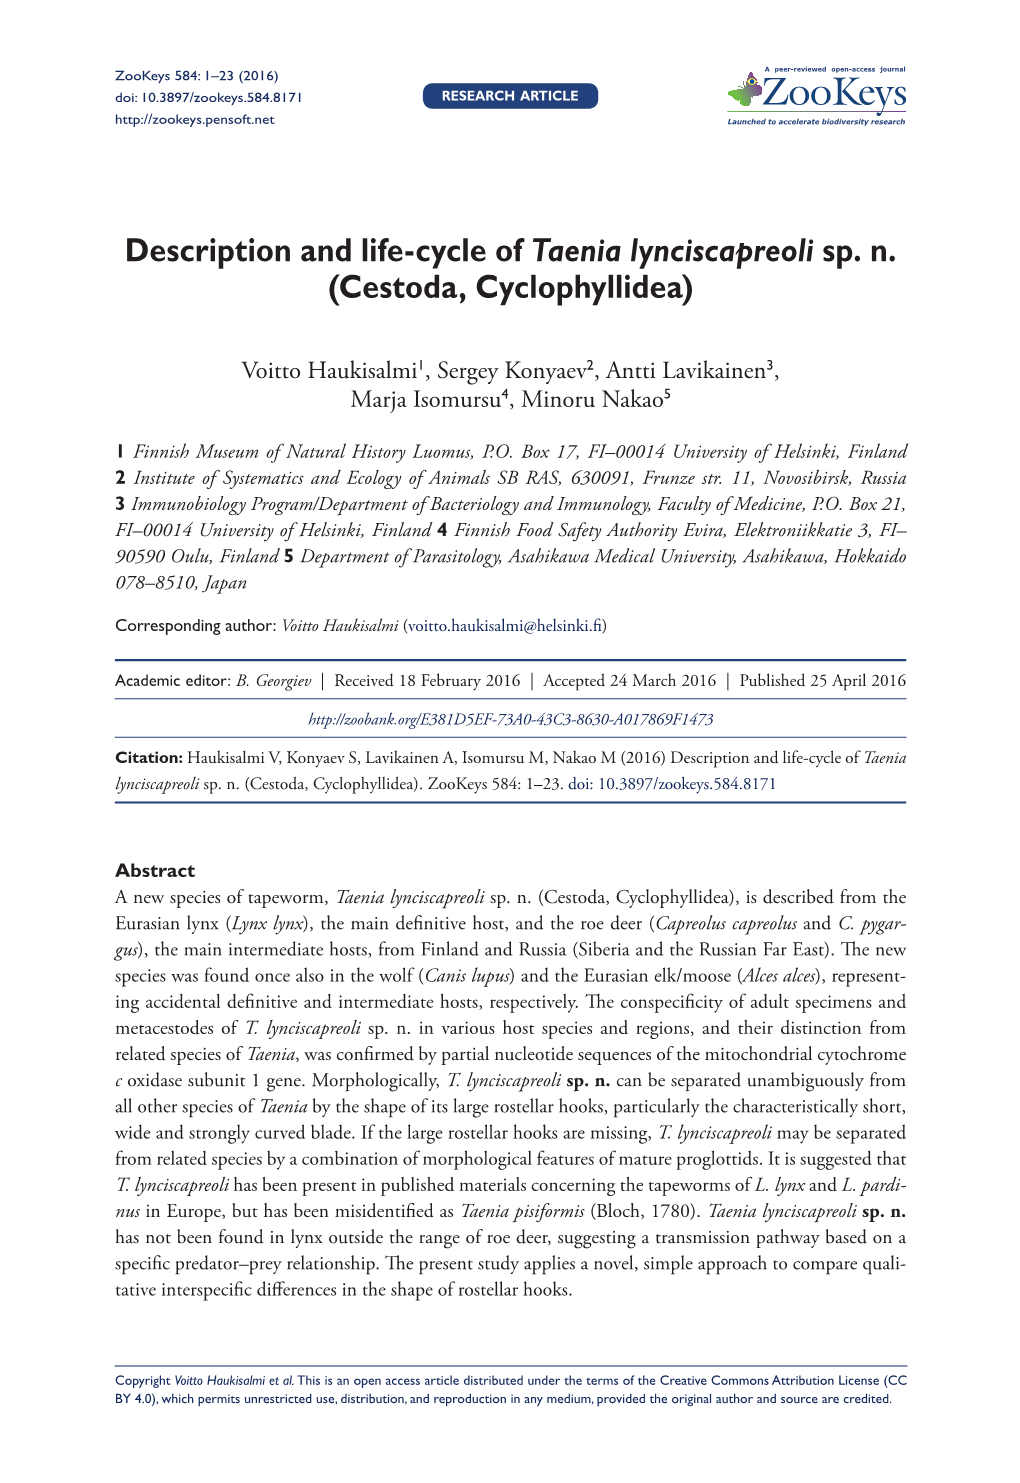 ﻿Description and Life-Cycle of Taenia Lynciscapreoli Sp. N. (Cestoda, Cyclophyllidea)